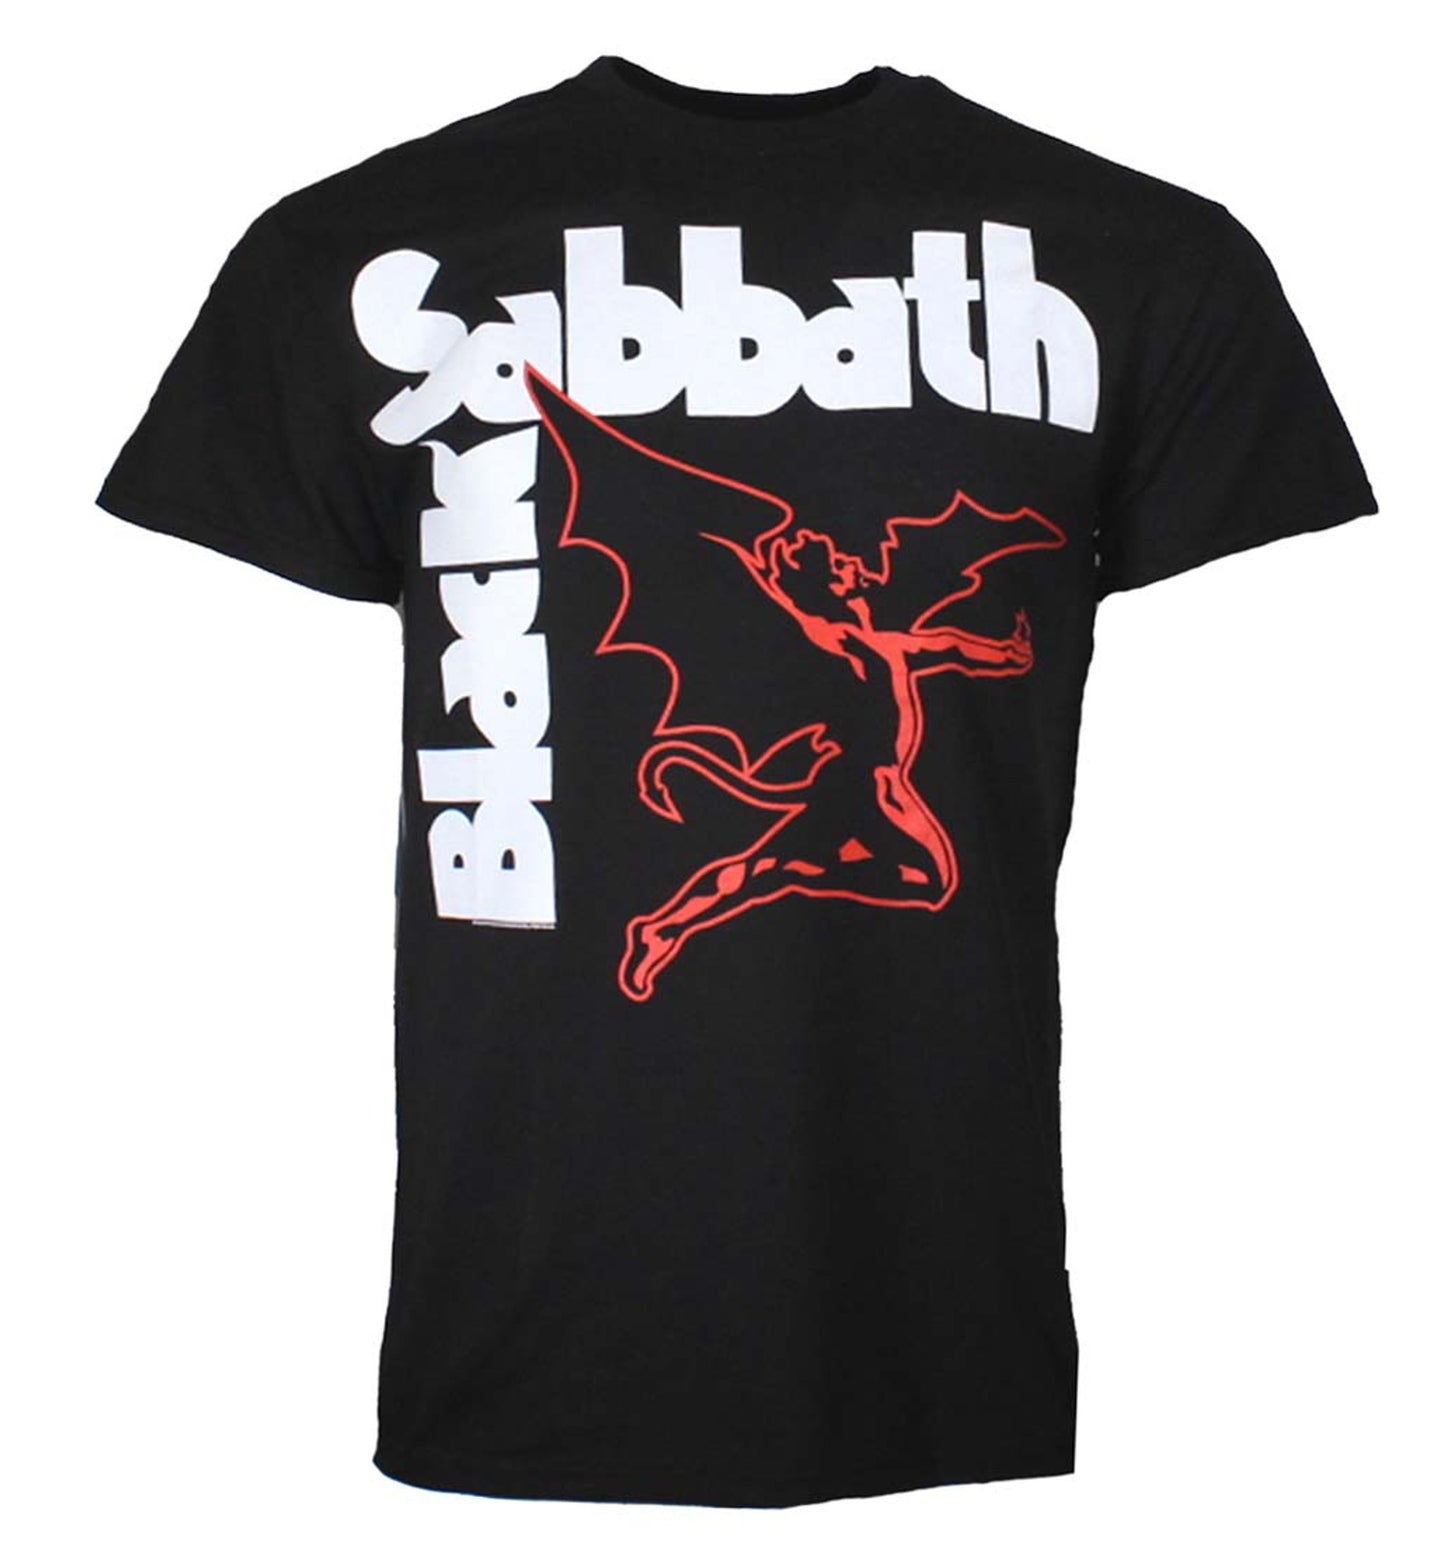 Black Sabbath Creature T-Shirt